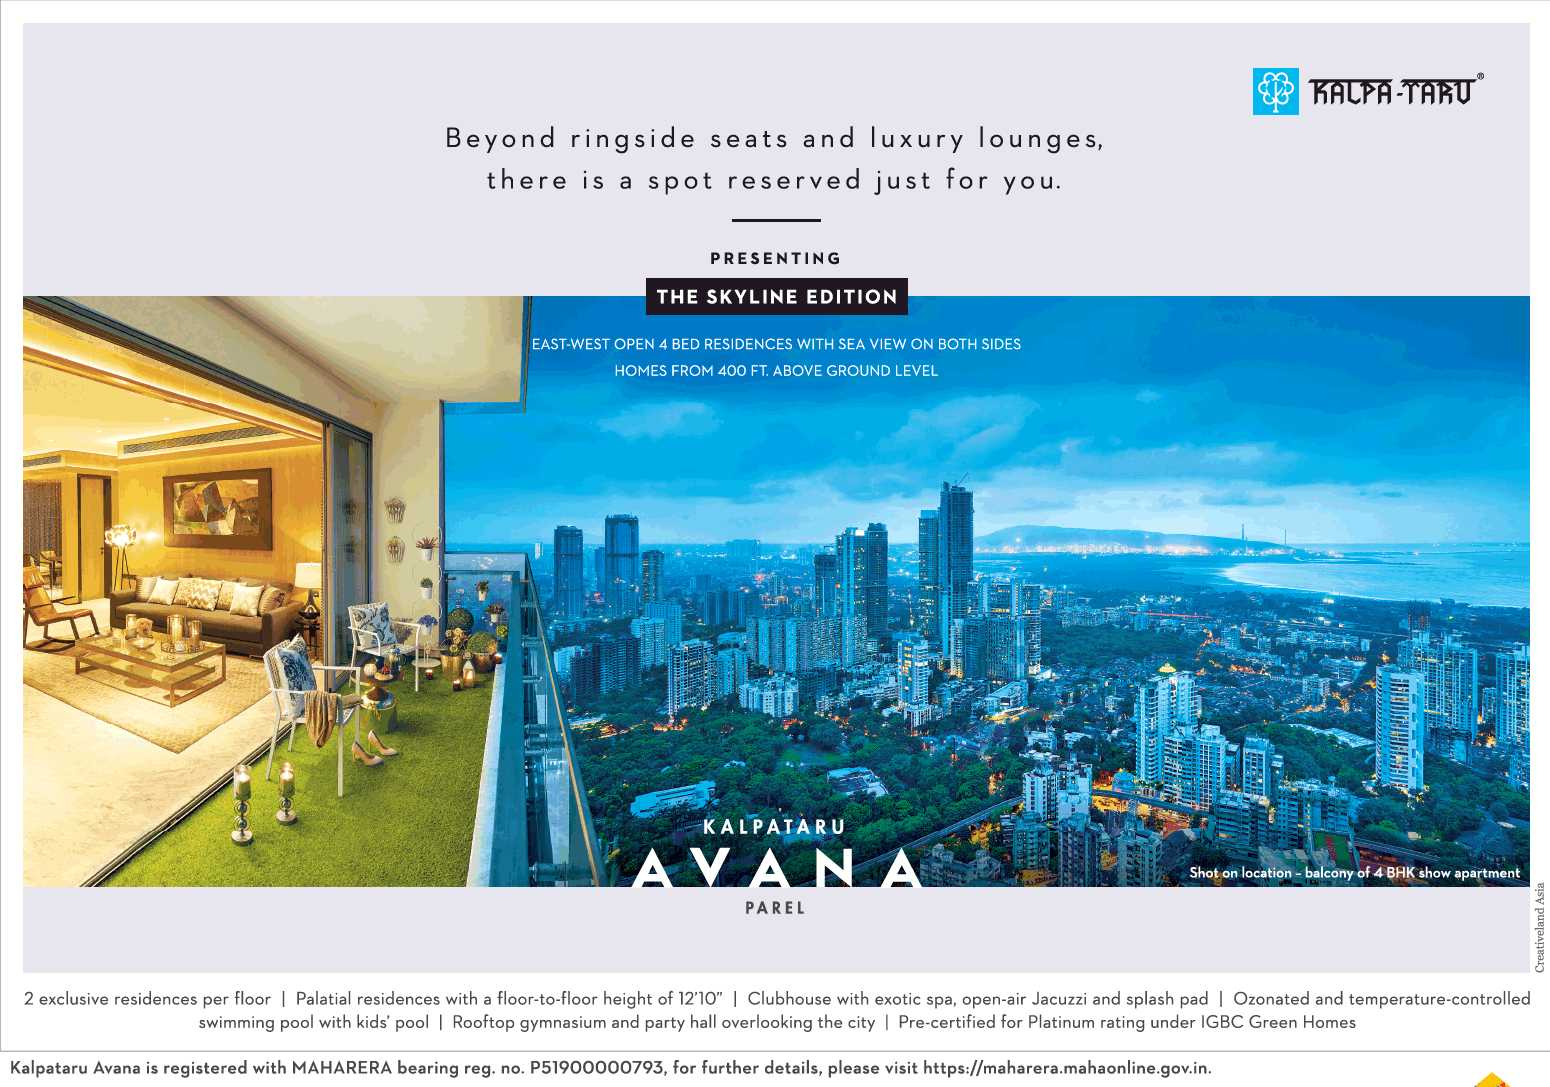 Presenting the skyline edition 4 bed residences at Kalpataru Avana in Parel. Mumbai